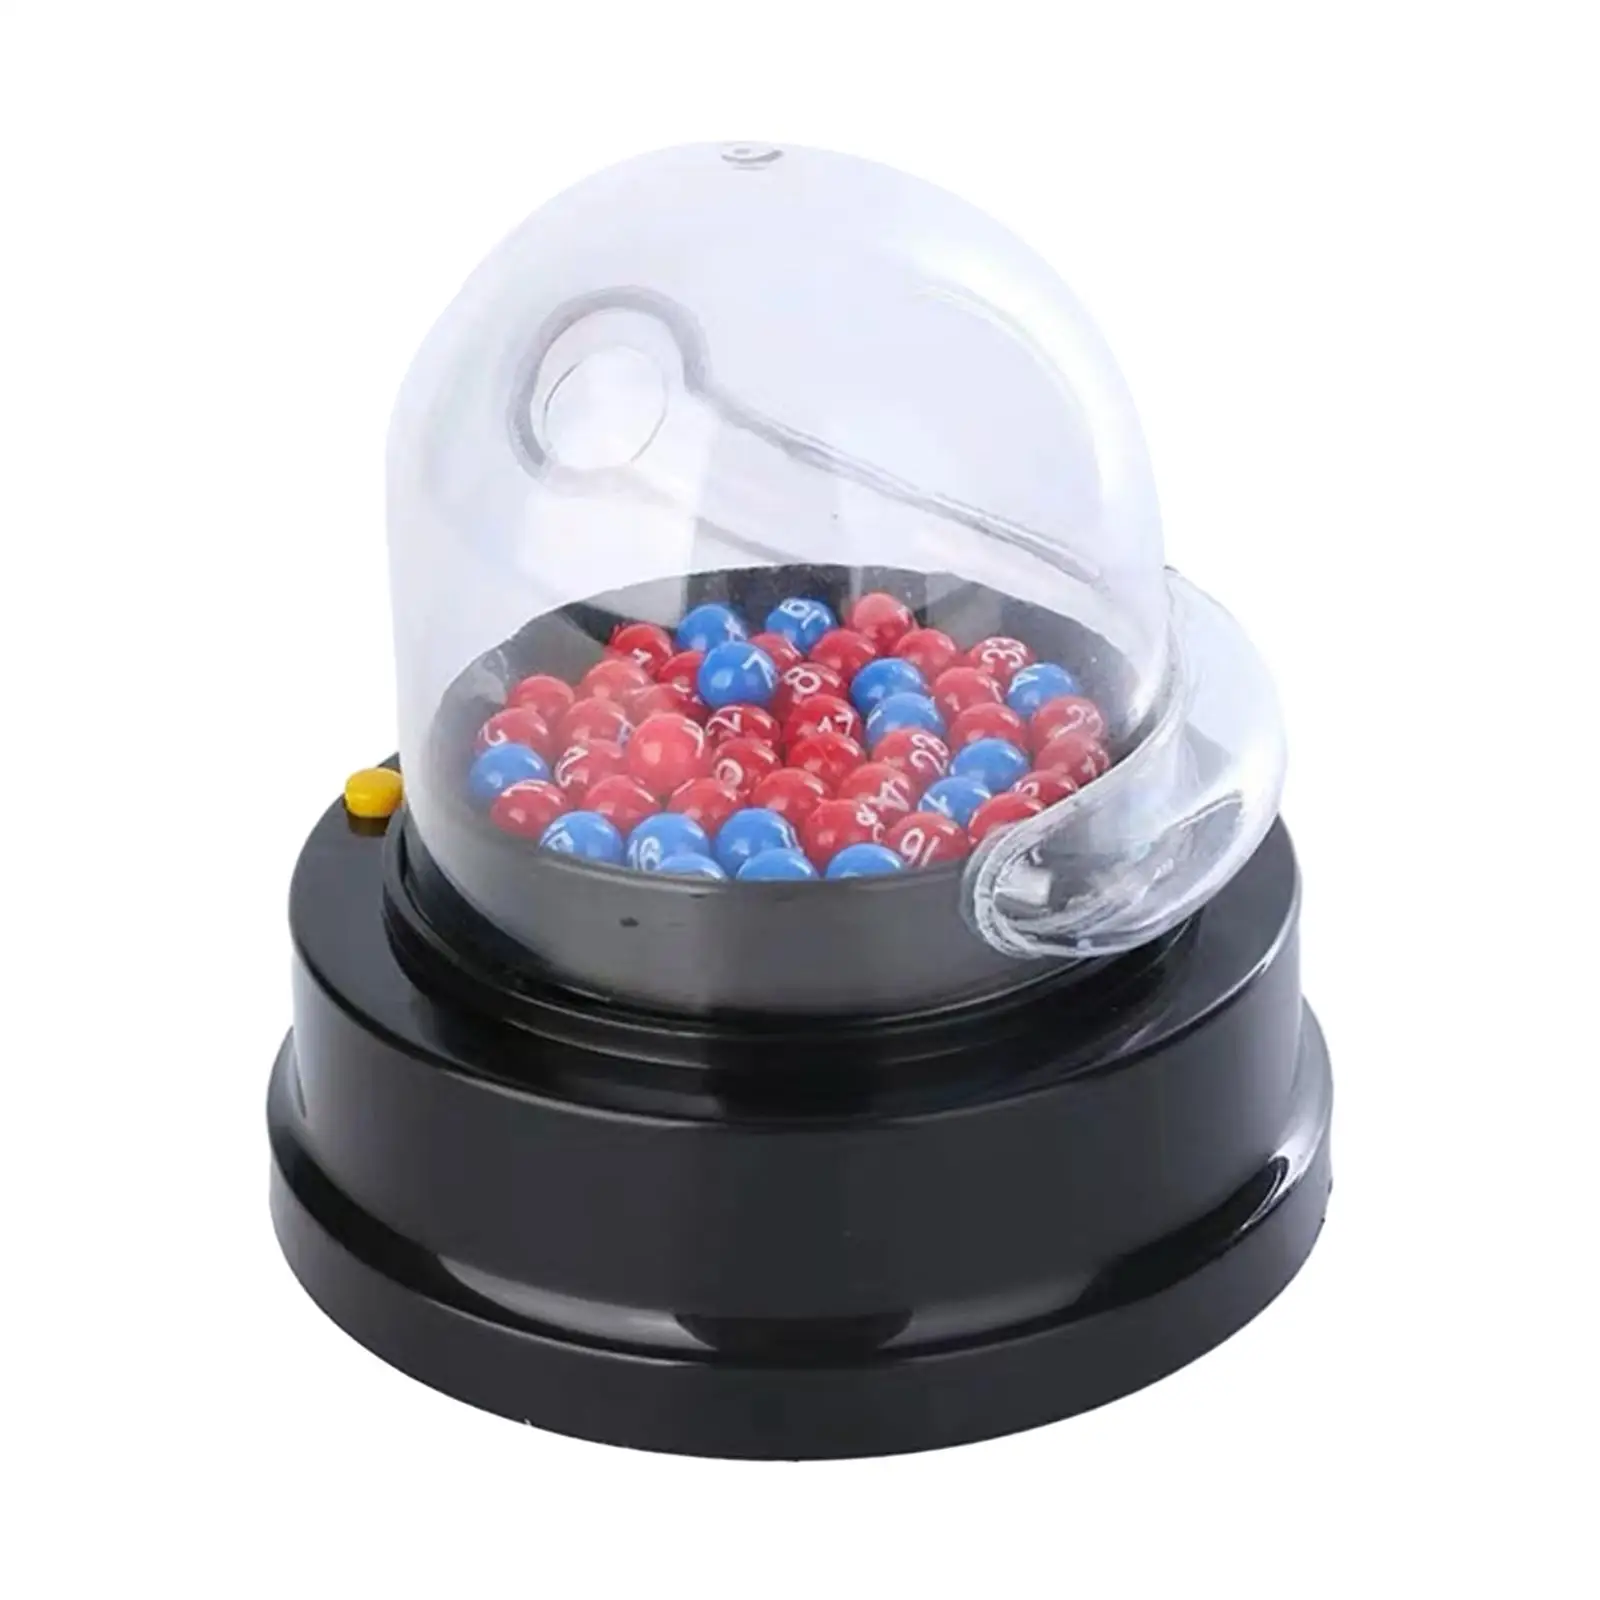 Electric Raffle Balls Machine Portable Bingo Machine Game with Balls for Club Restaurant Recreational Activity Sweepstakes